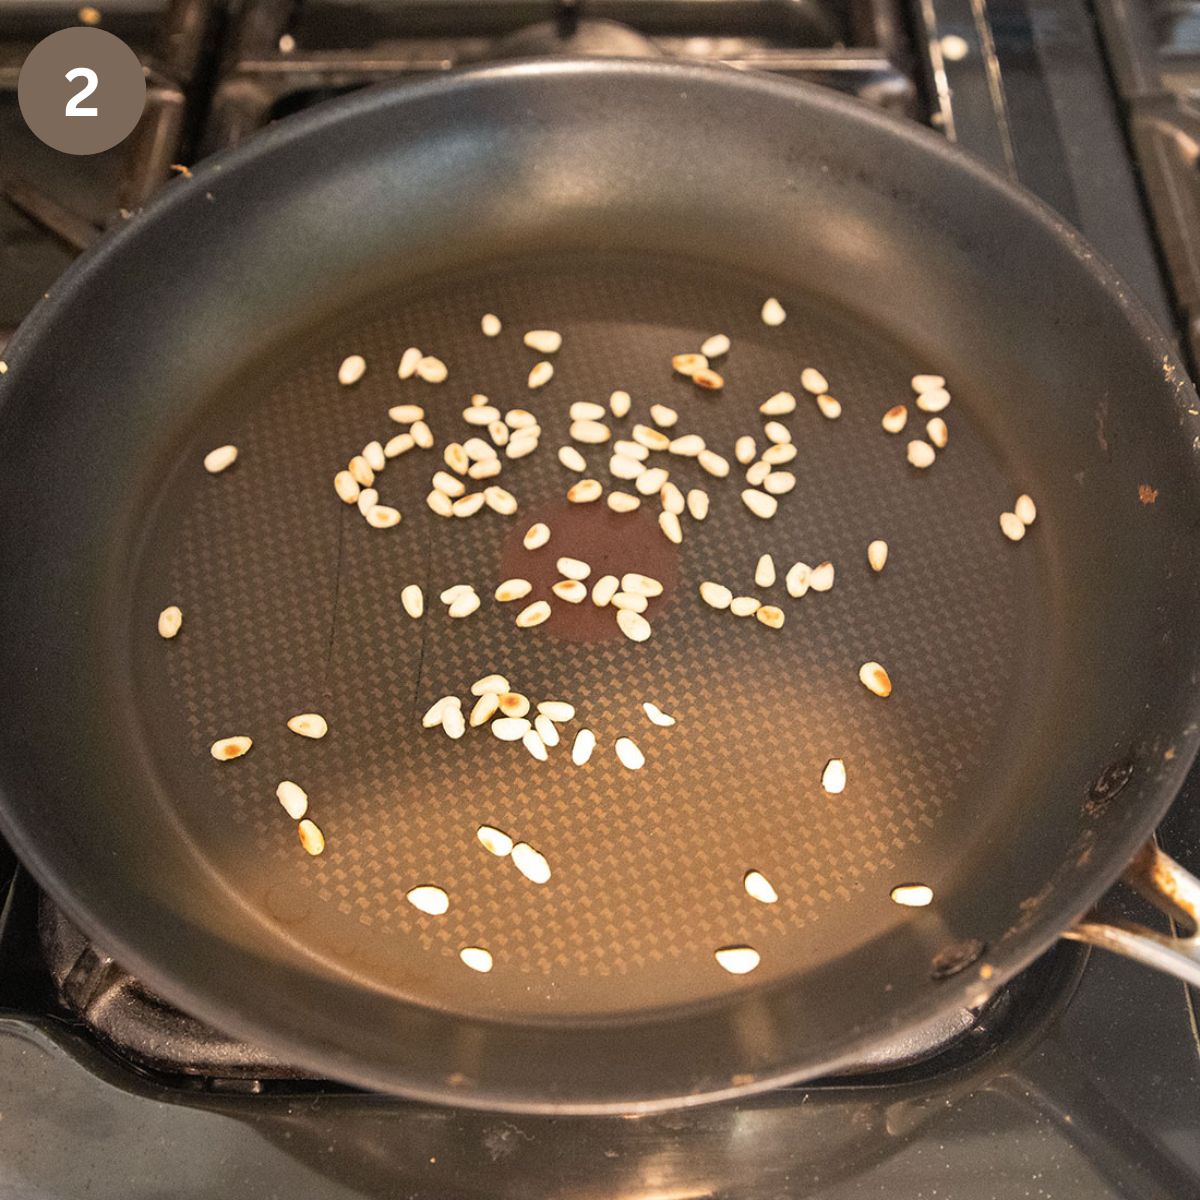 roasting pine nuts in a frying pan.